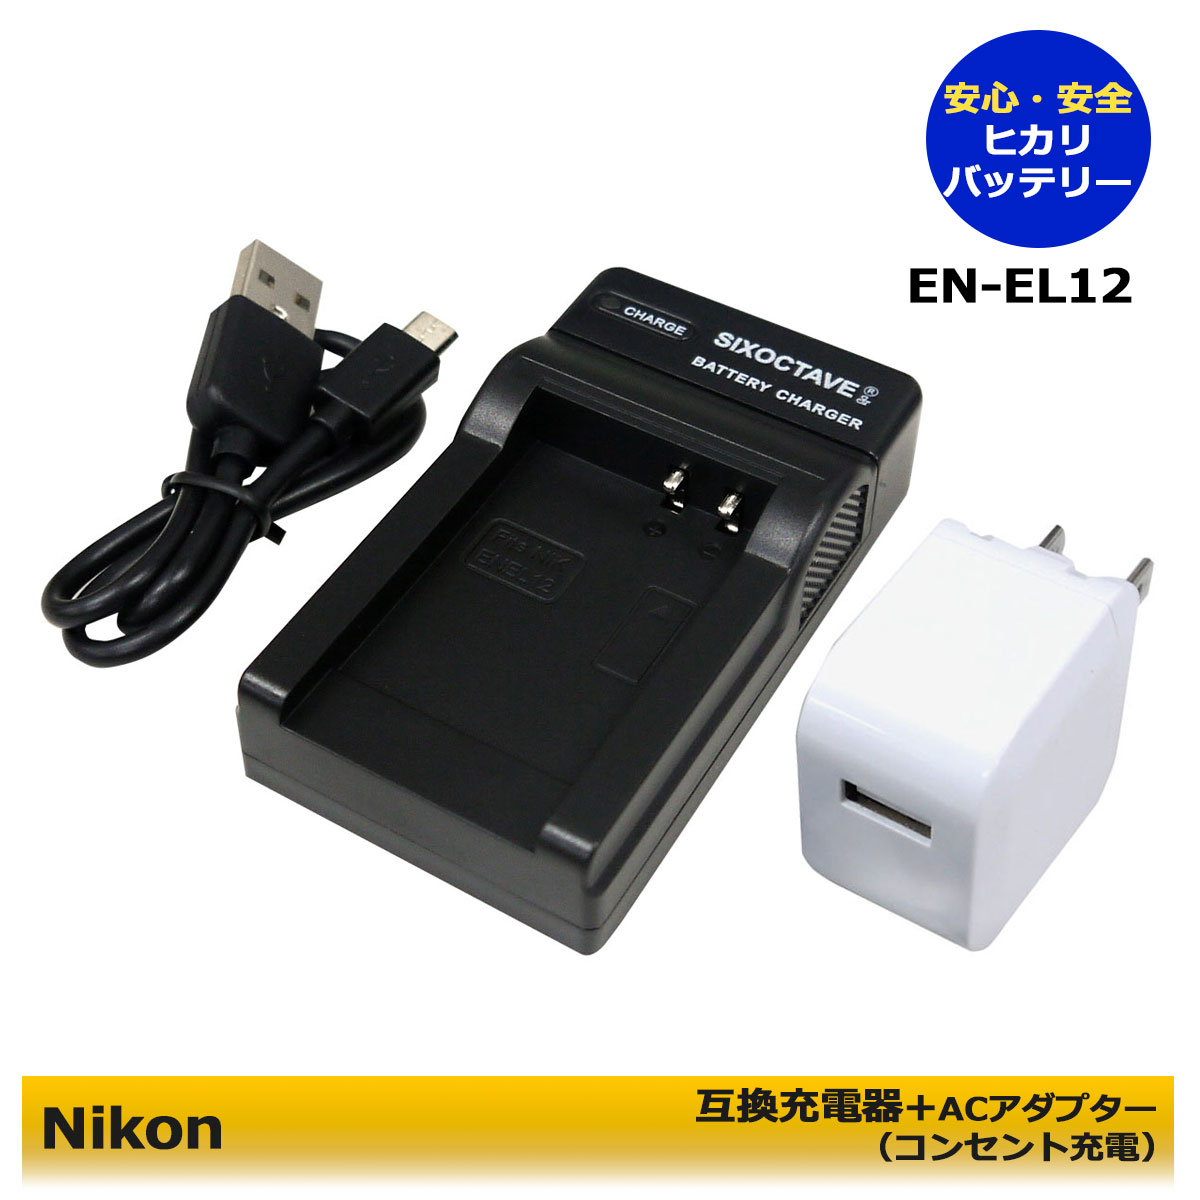 ニコン EN-EL5 AC充電器 AC電源 急速充電器 互換品